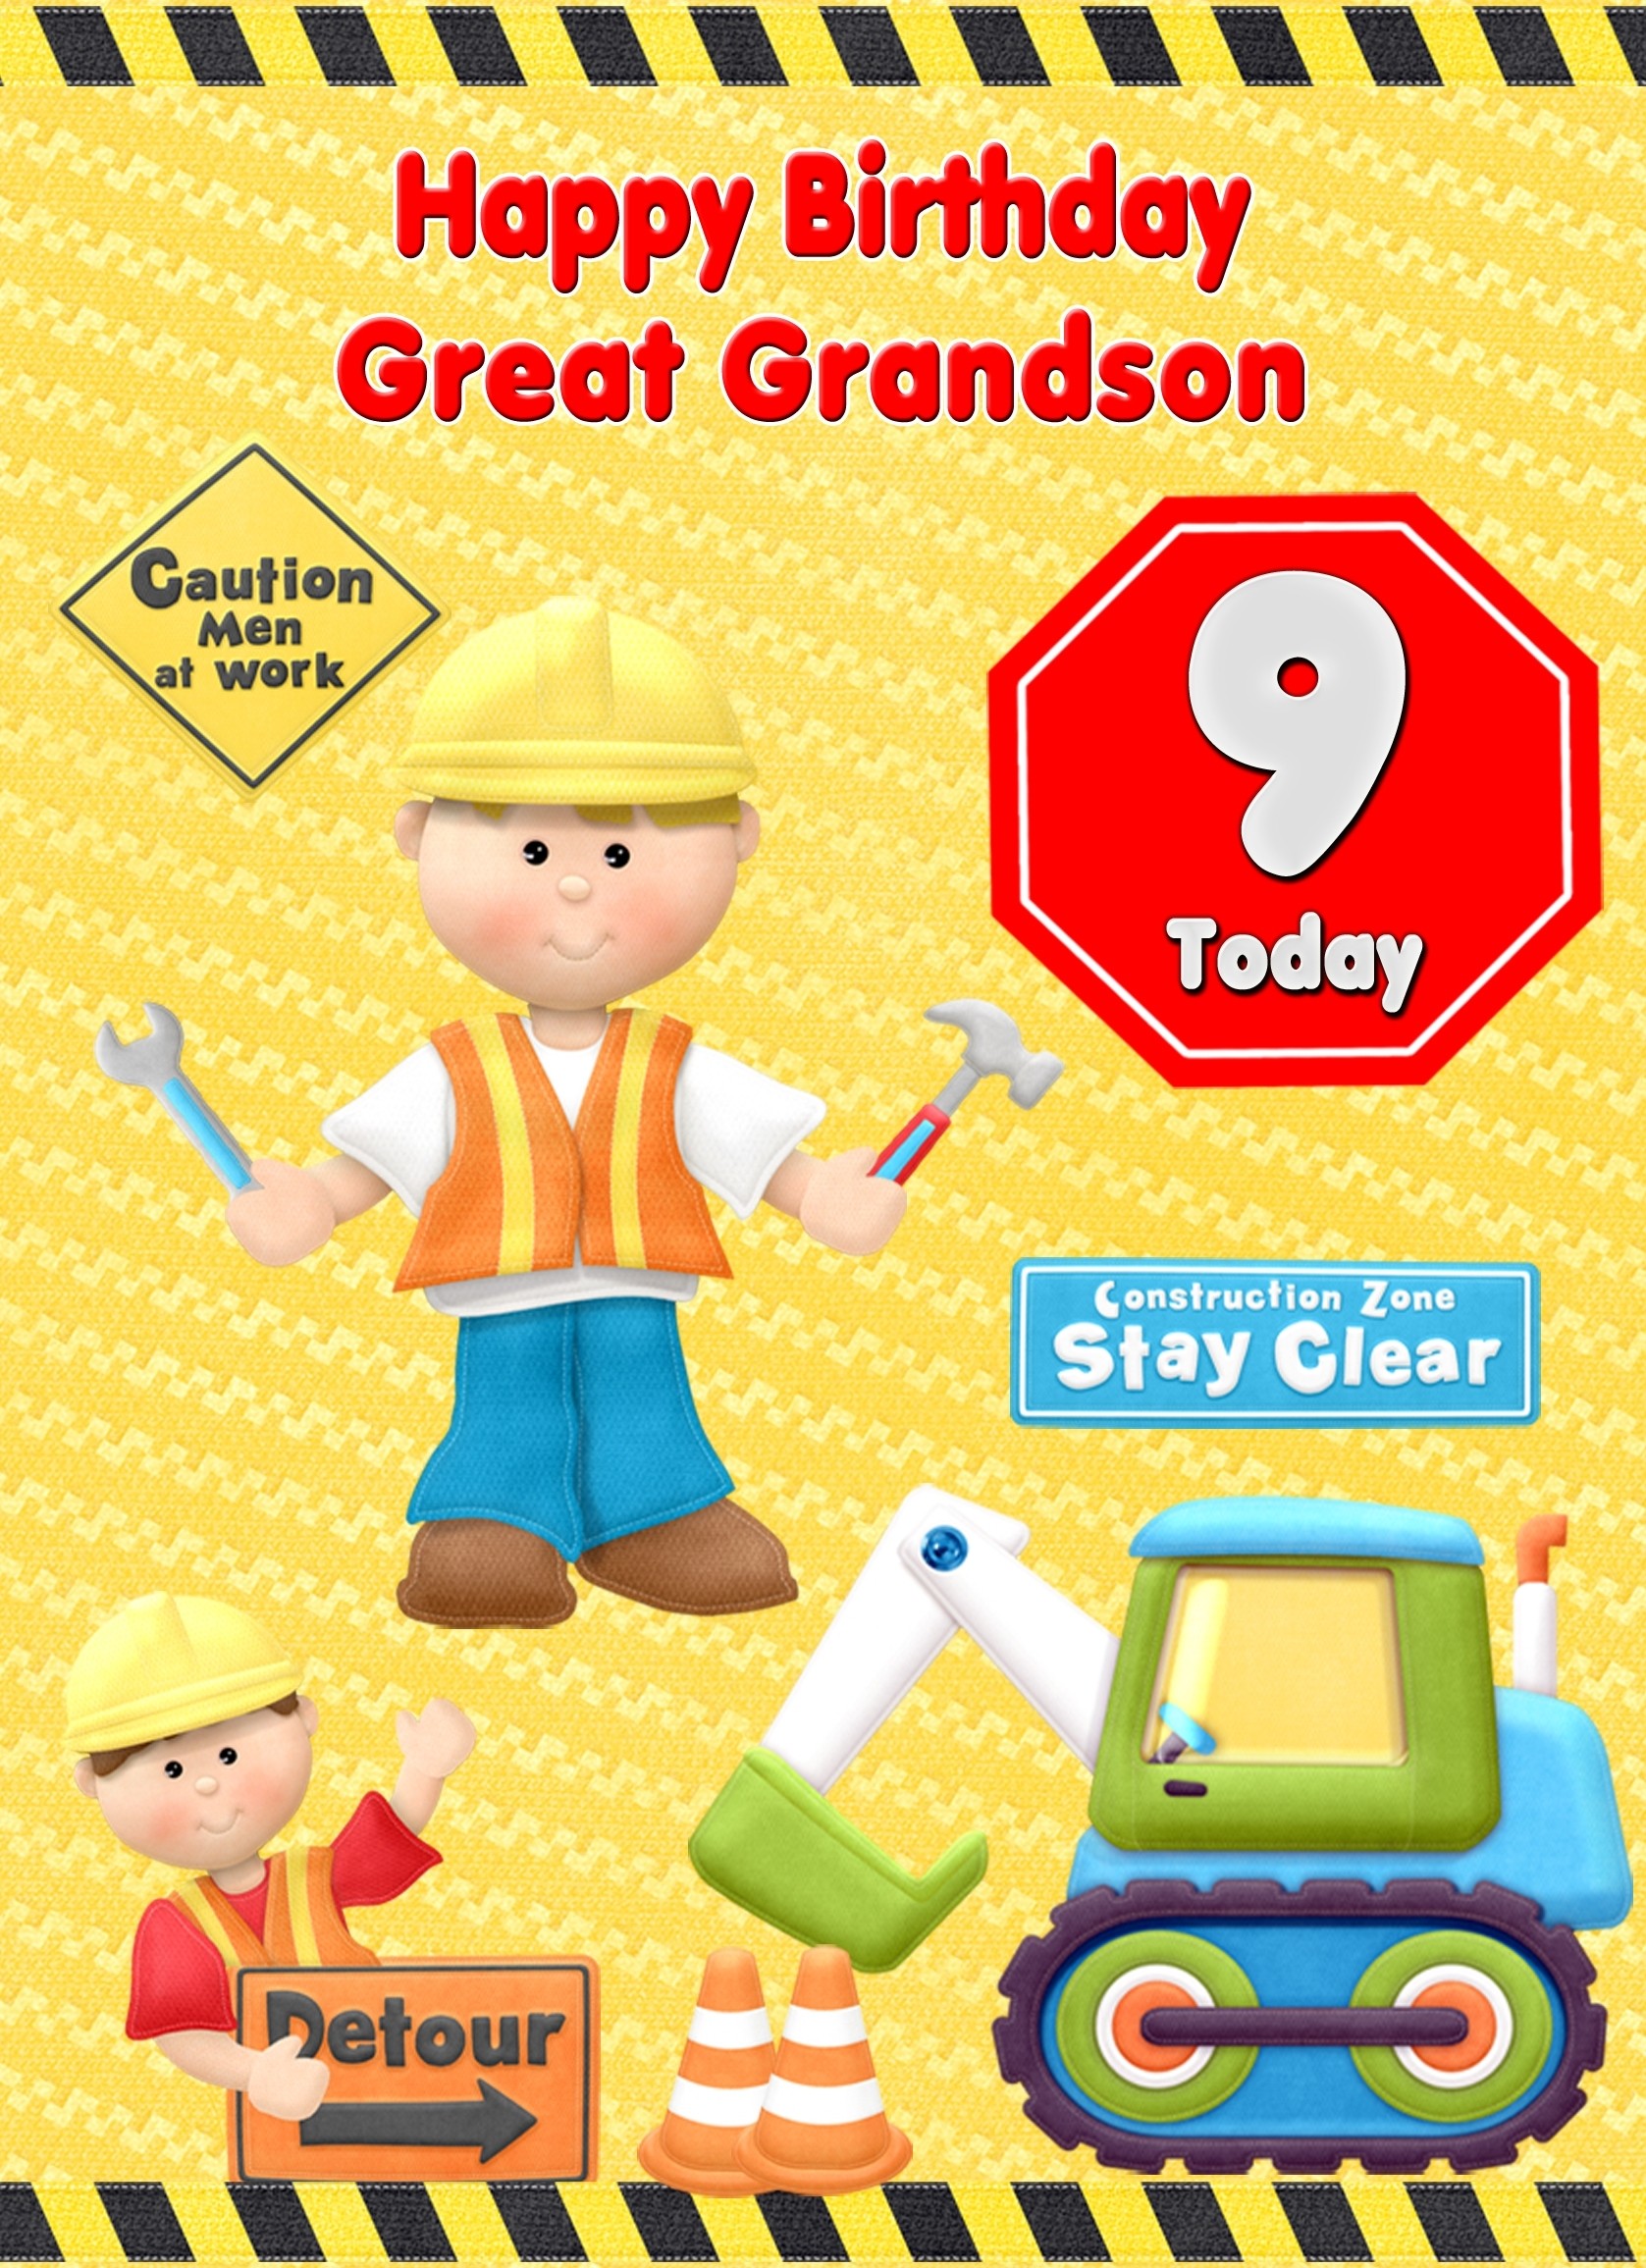 Kids 9th Birthday Builder Cartoon Card for Great Grandson